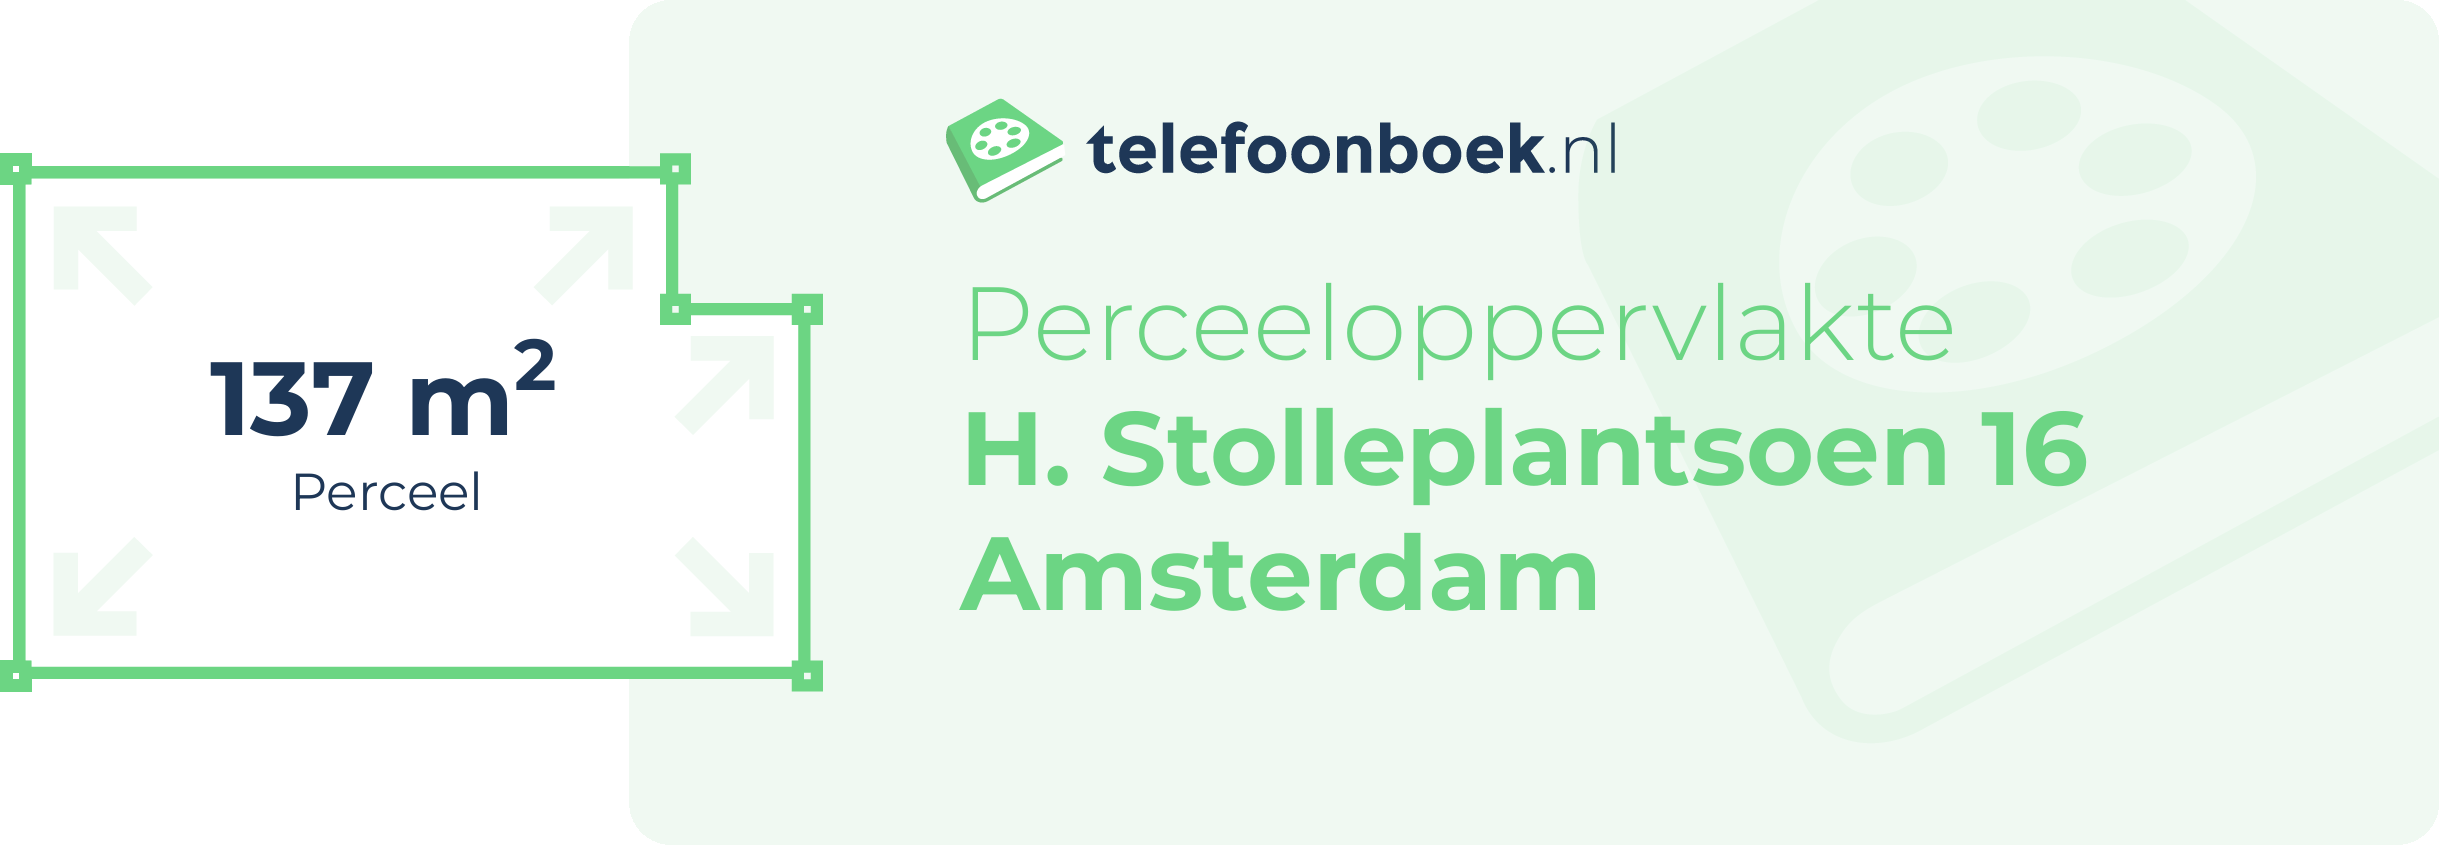 Perceeloppervlakte H. Stolleplantsoen 16 Amsterdam